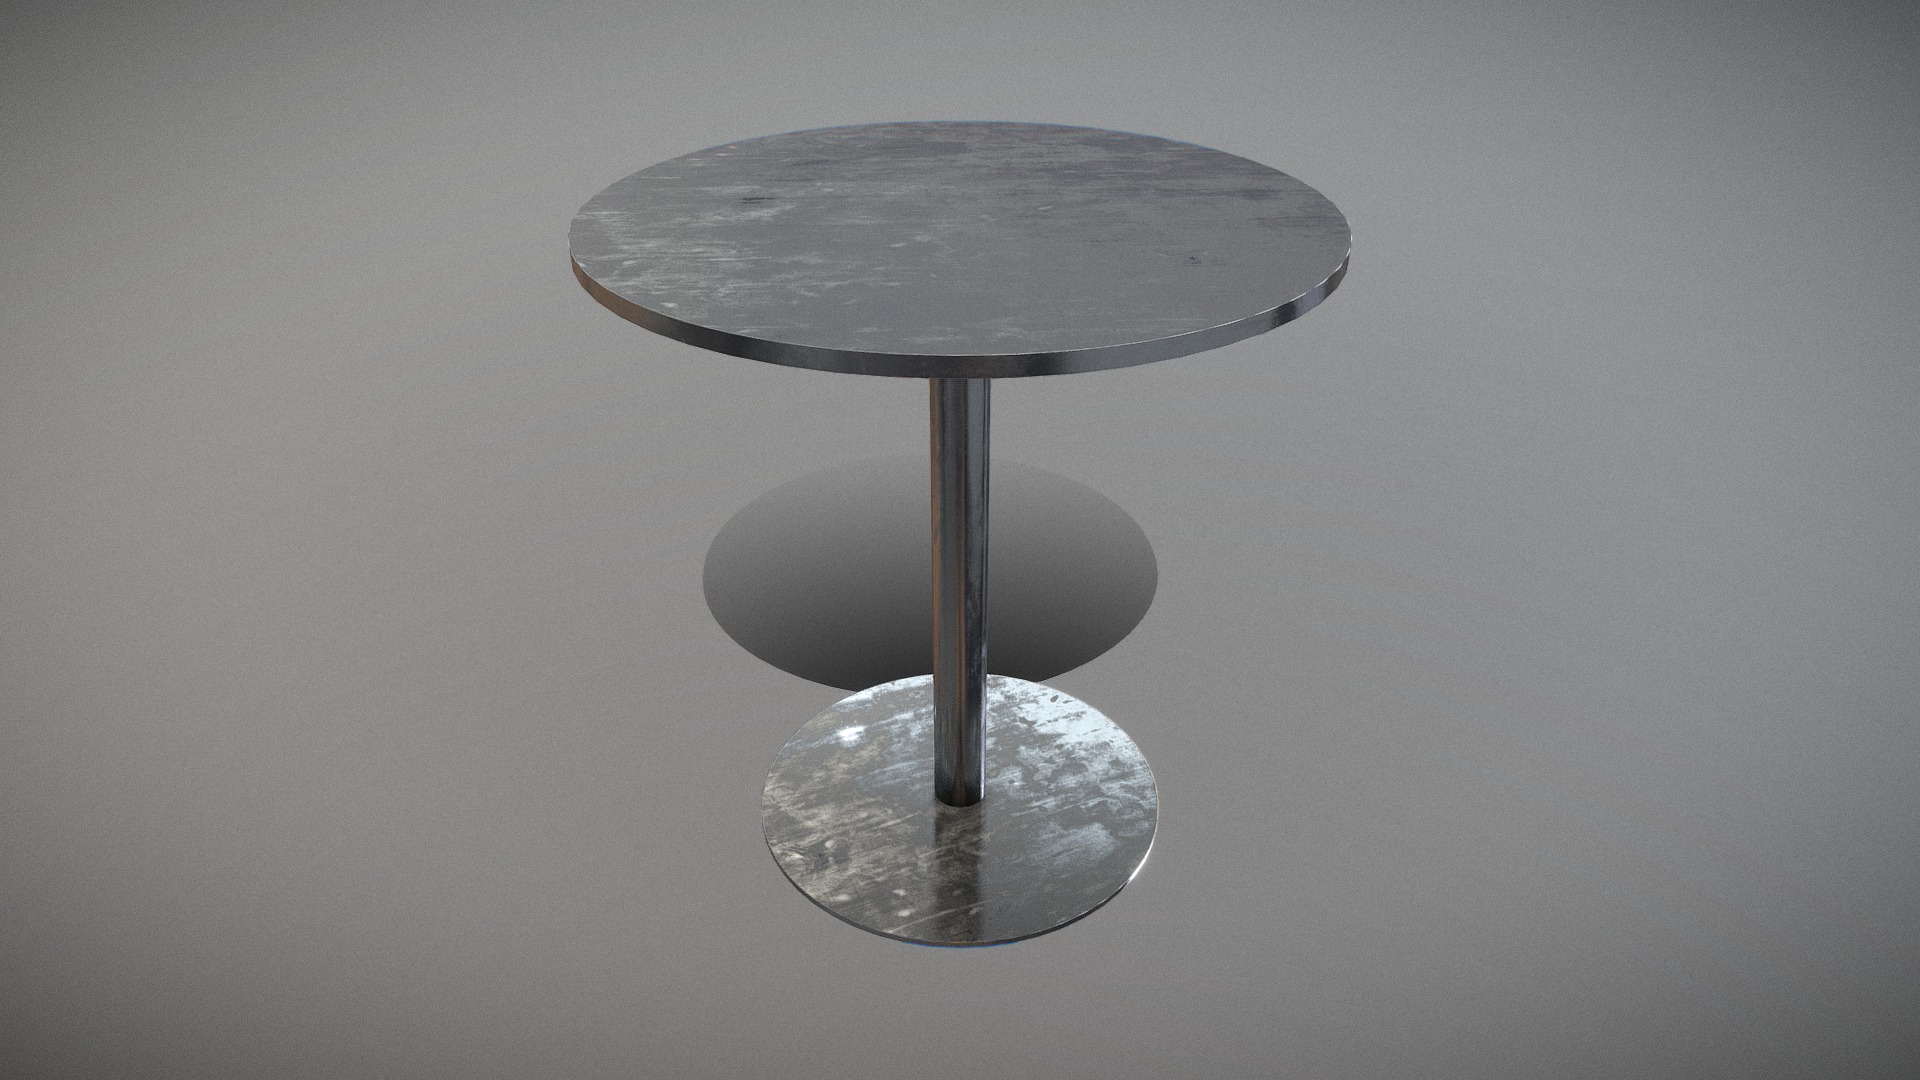 3D model Mesa Café Table – Model 4670 Steel - This is a 3D model of the Mesa Café Table - Model 4670 Steel. The 3D model is about a round table with a round top.